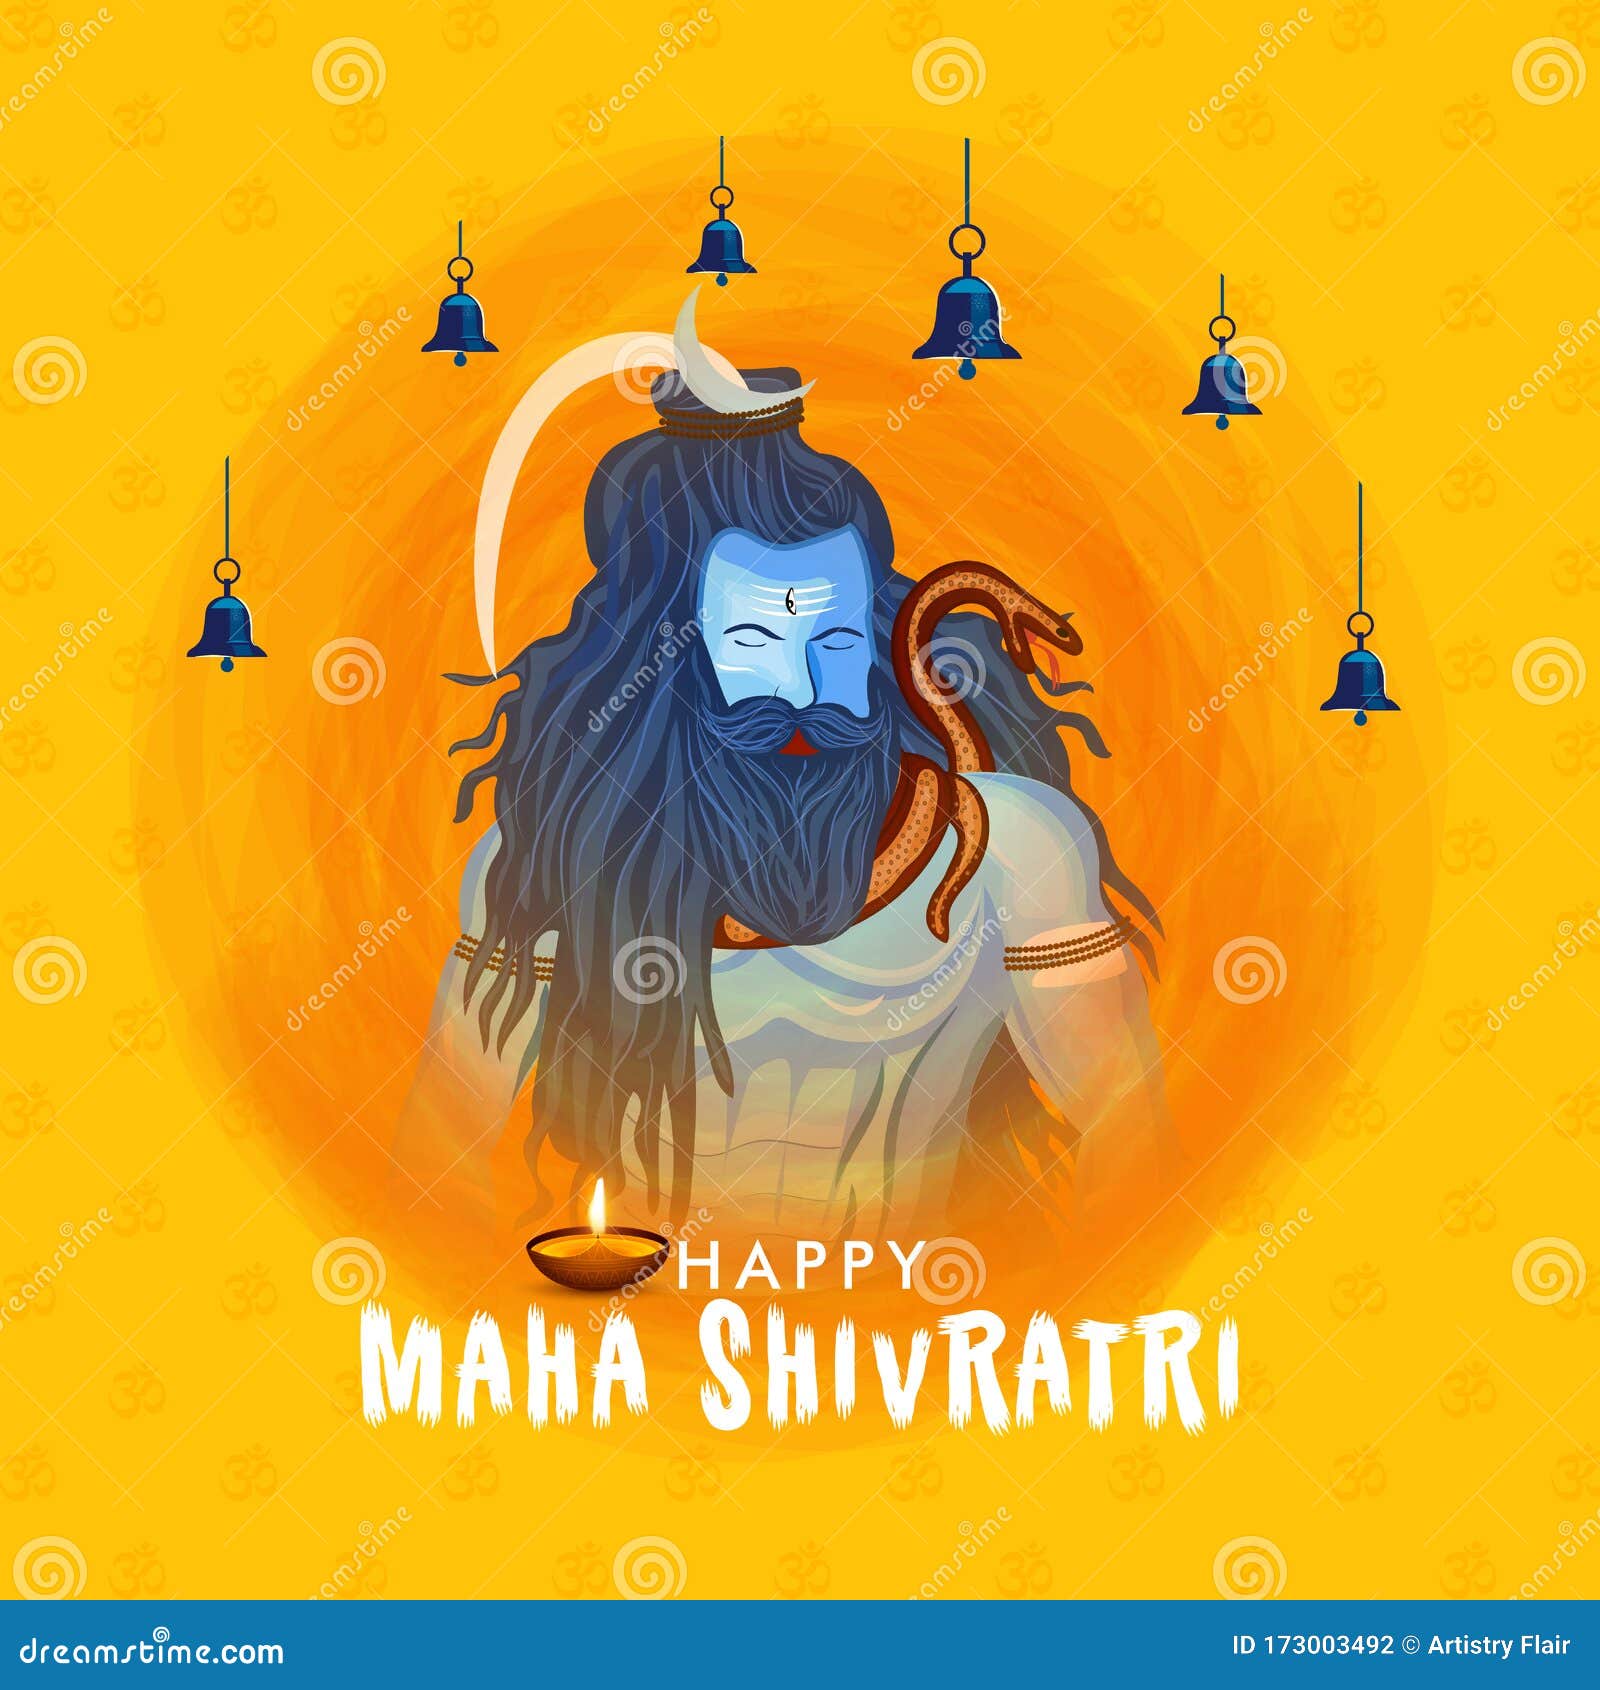 Illustration of Lord Shiva on Abstract Background. Happy Maha Shivratri.  Stock Illustration - Illustration of mahadev, enlightenment: 173003492